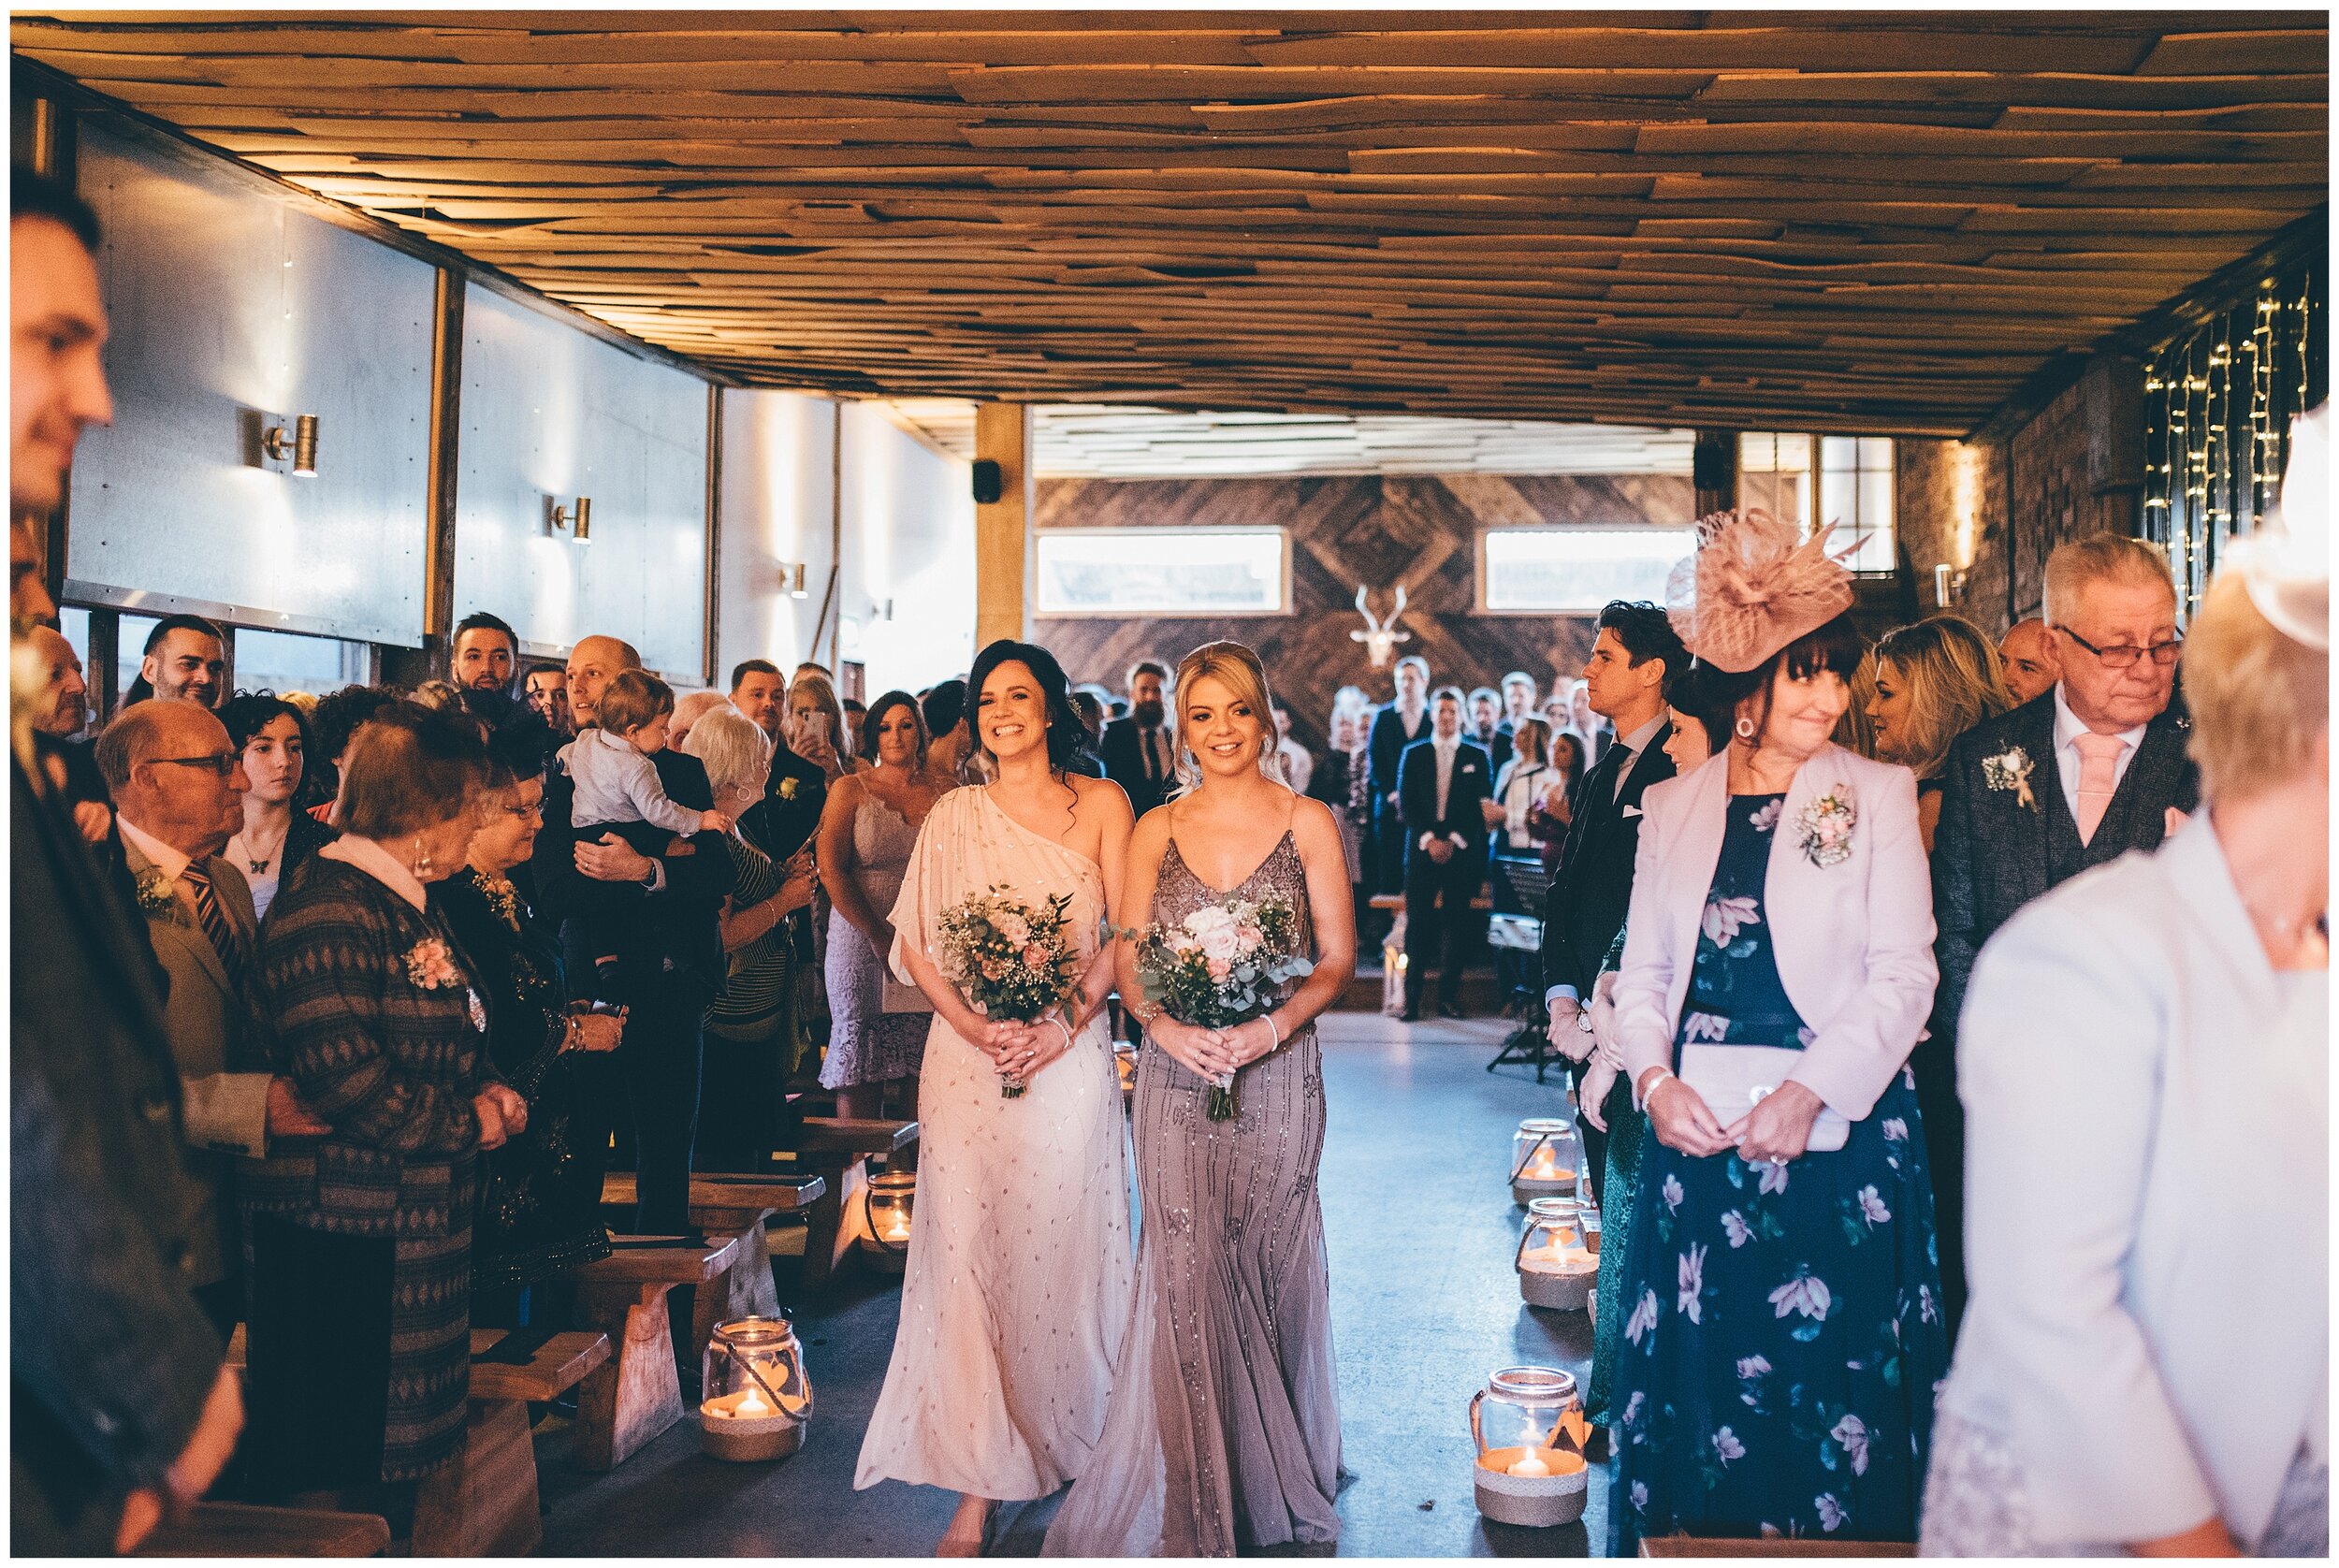 Wedding ceremony at Owen House Barn.